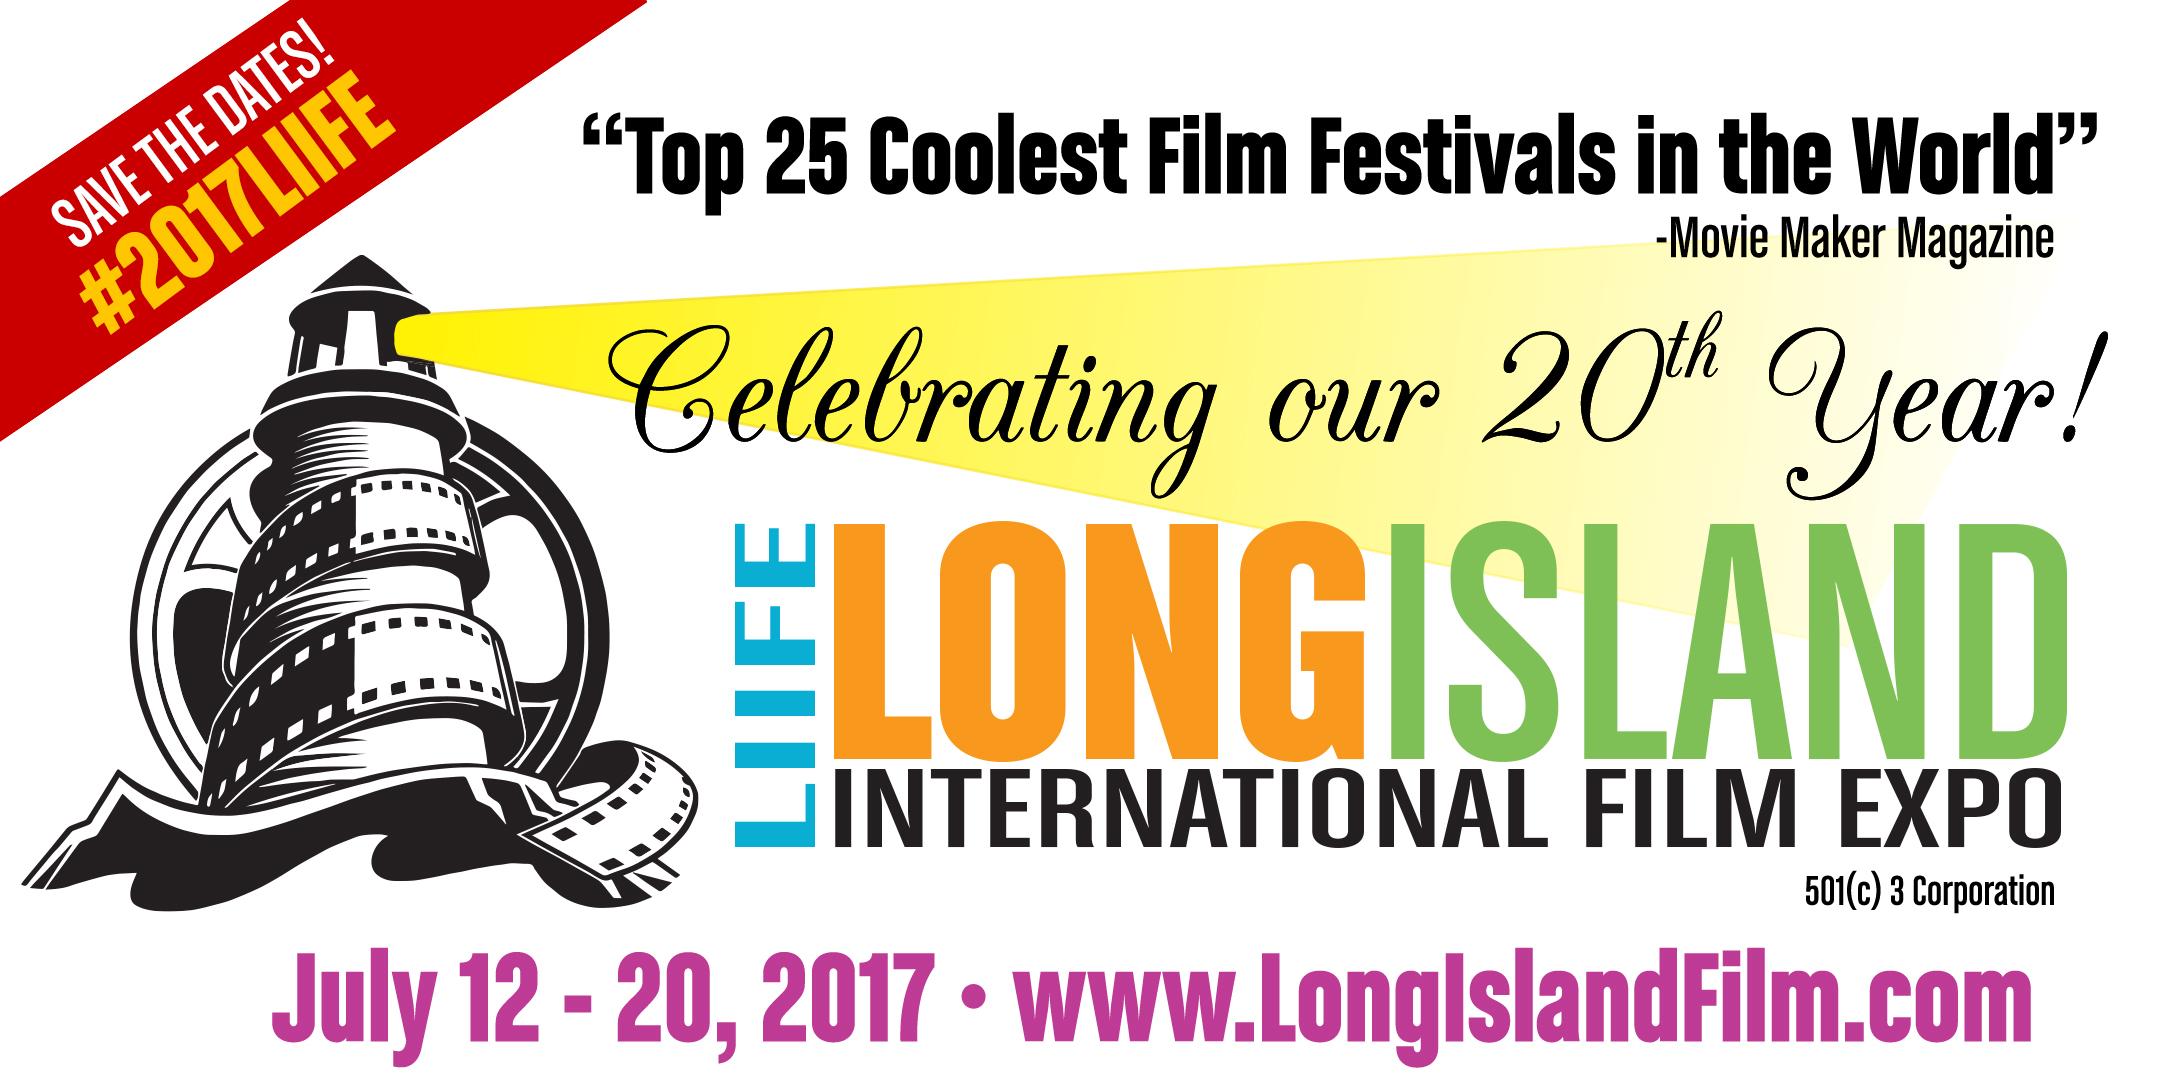 2017 Long Island International Film Expo - Wednesday, July 12, 2017